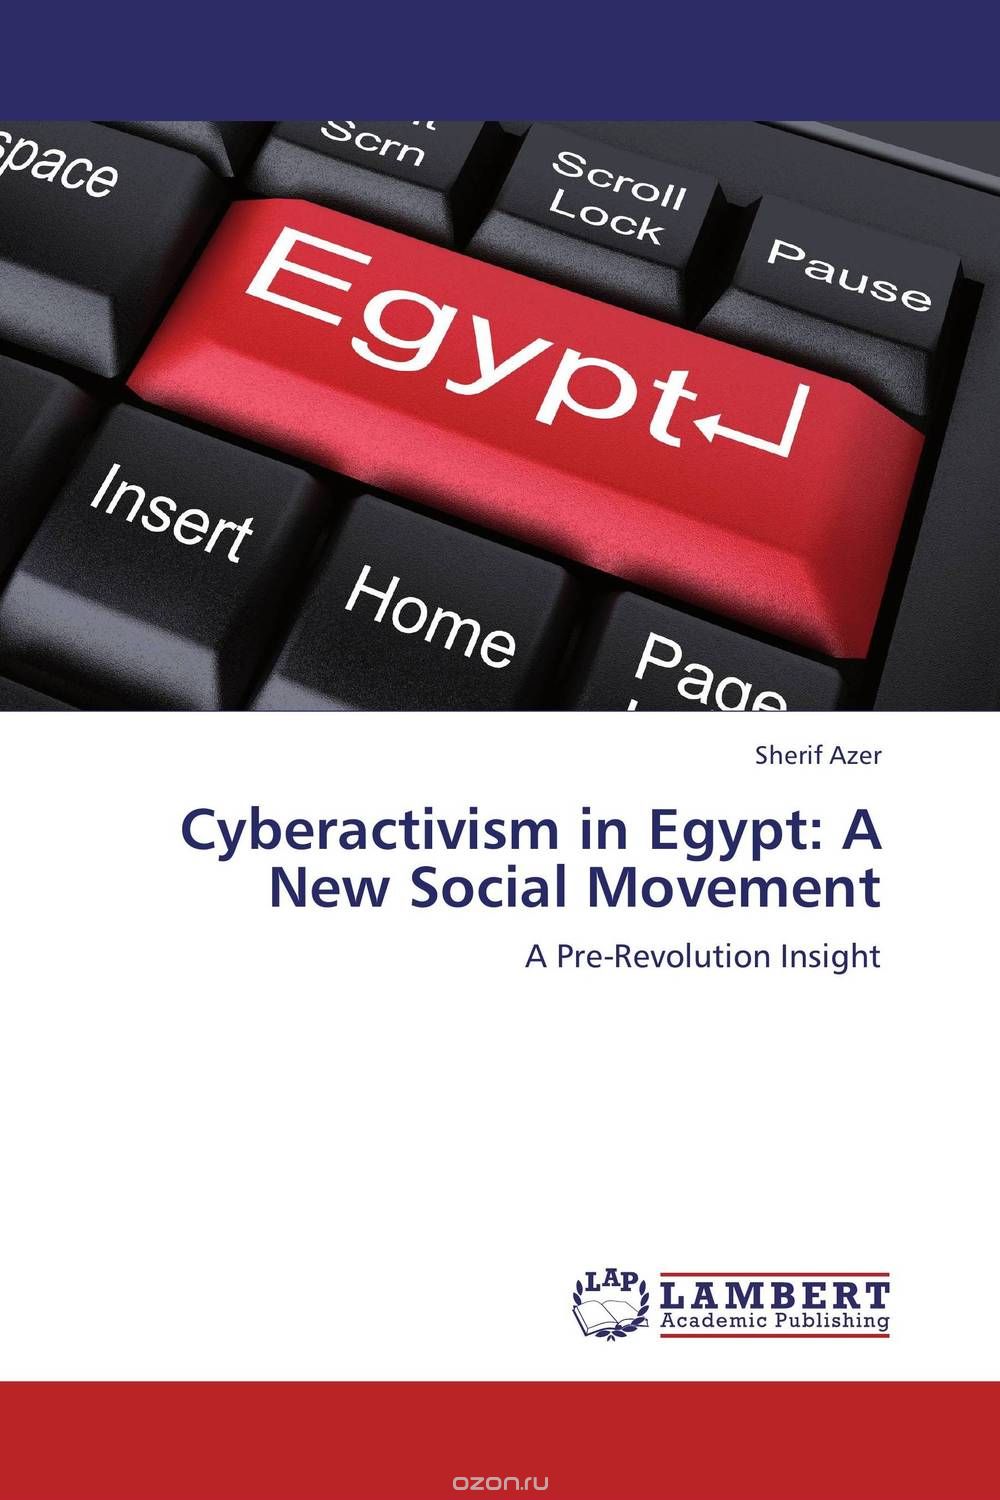 Скачать книгу "Cyberactivism in Egypt: A New Social Movement"